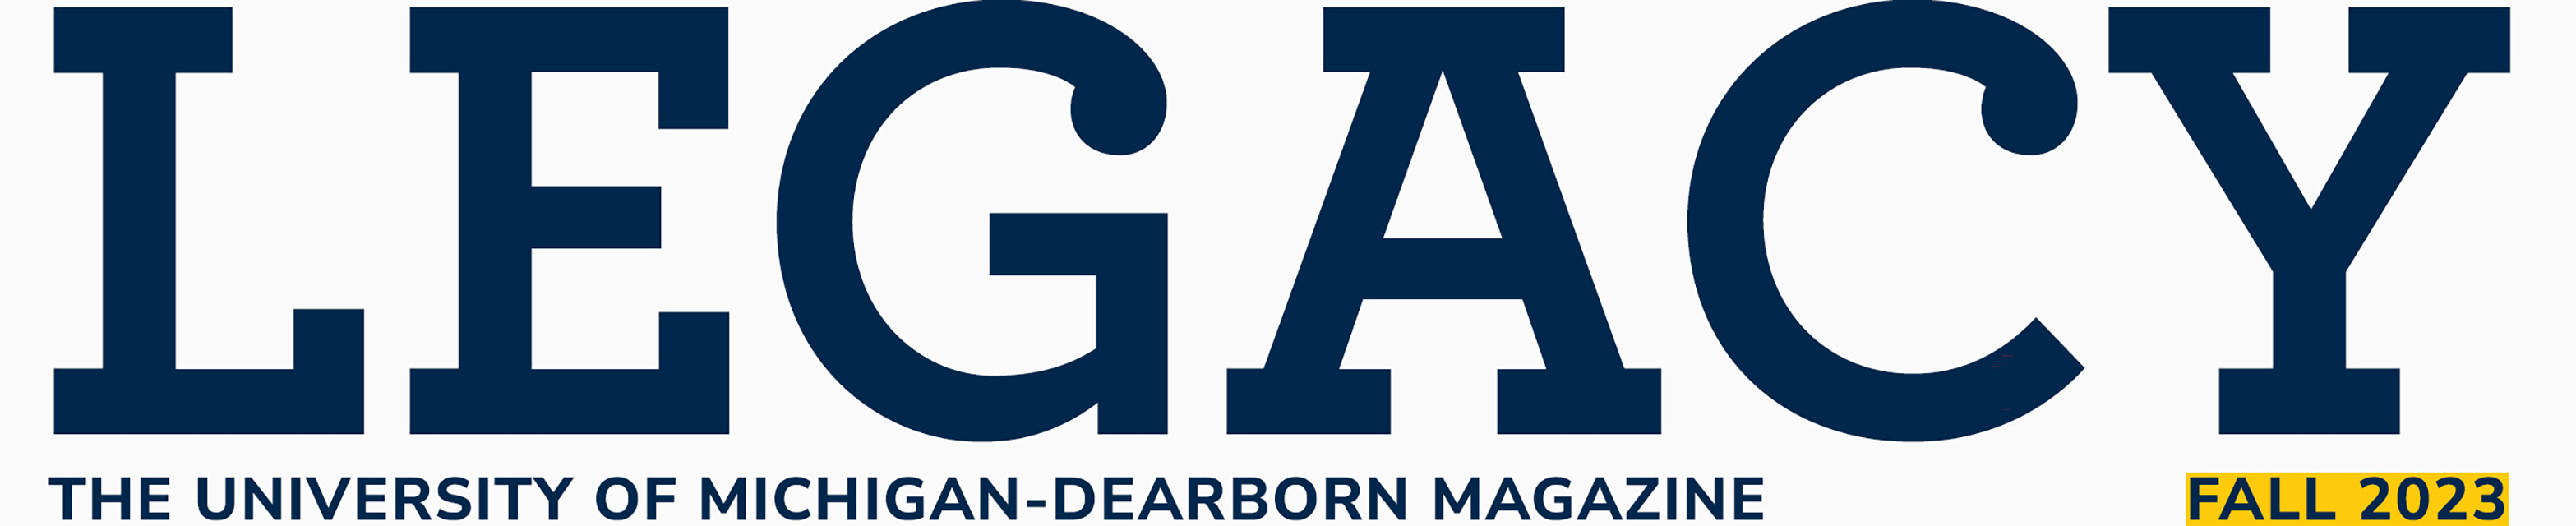 Legacy: The University of Michigan-Dearborn magazine, Fall 2023